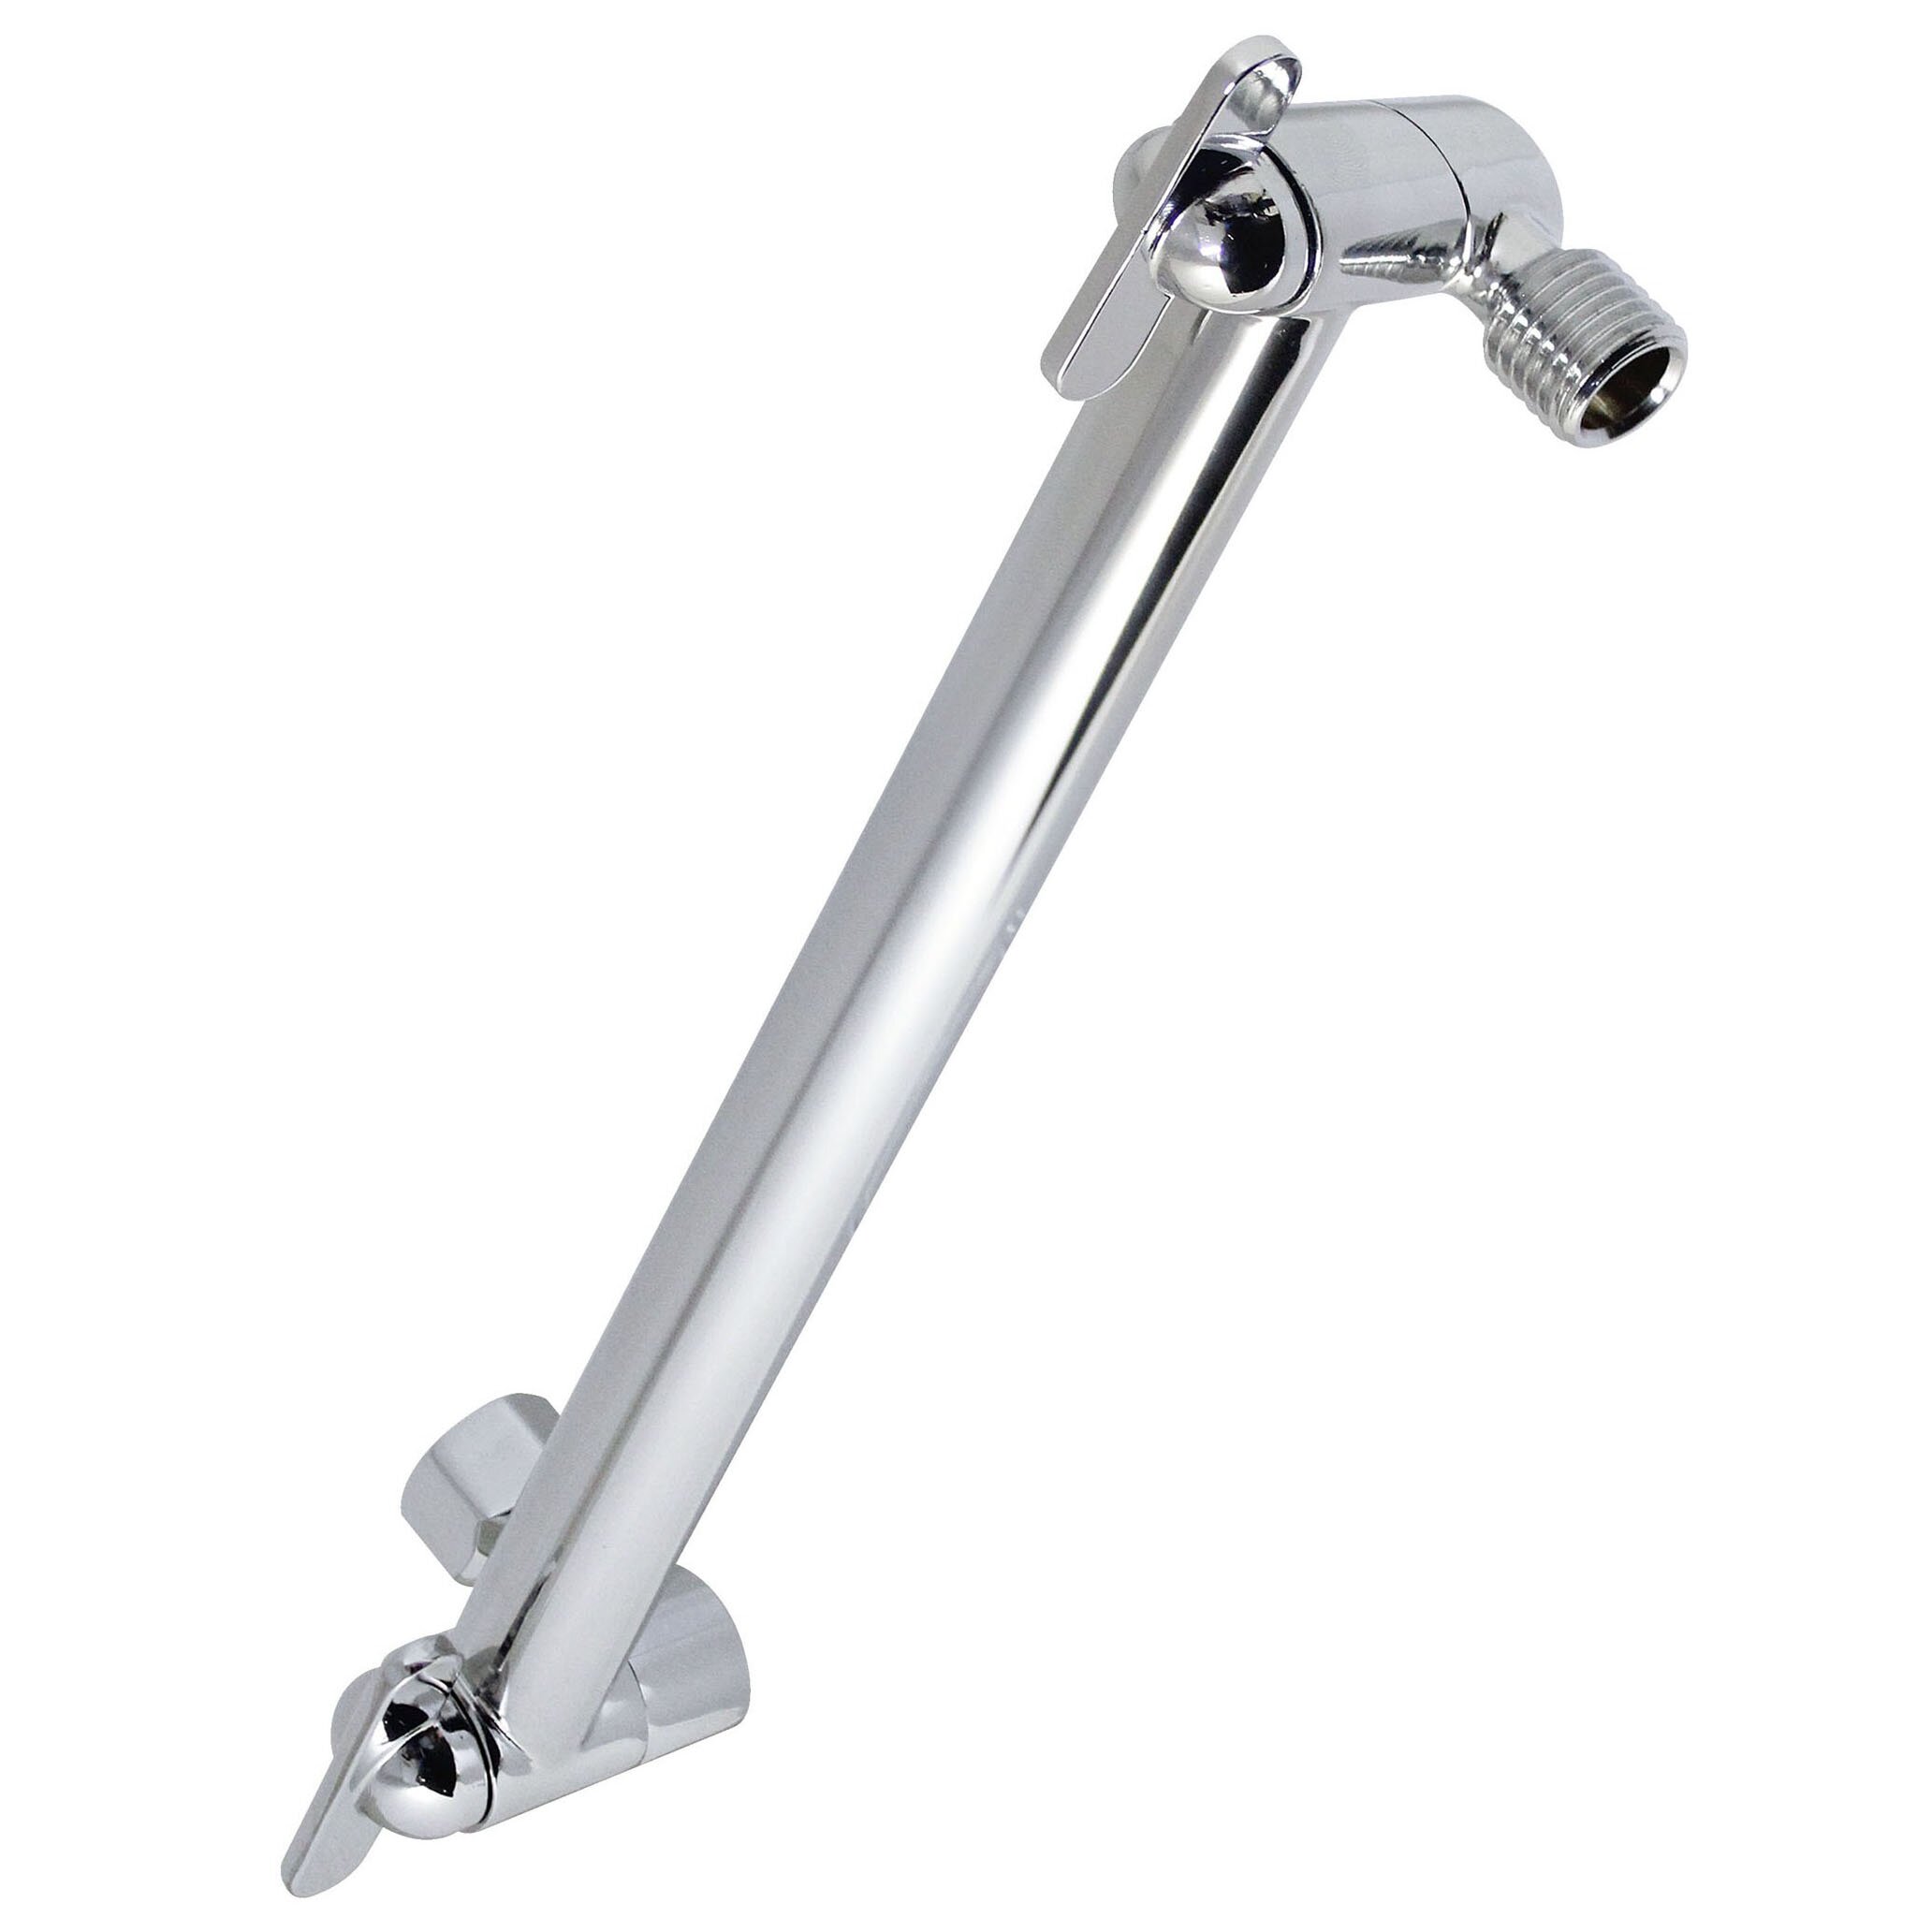 Modona Adjustable Shower Arm & Reviews | Wayfair.ca